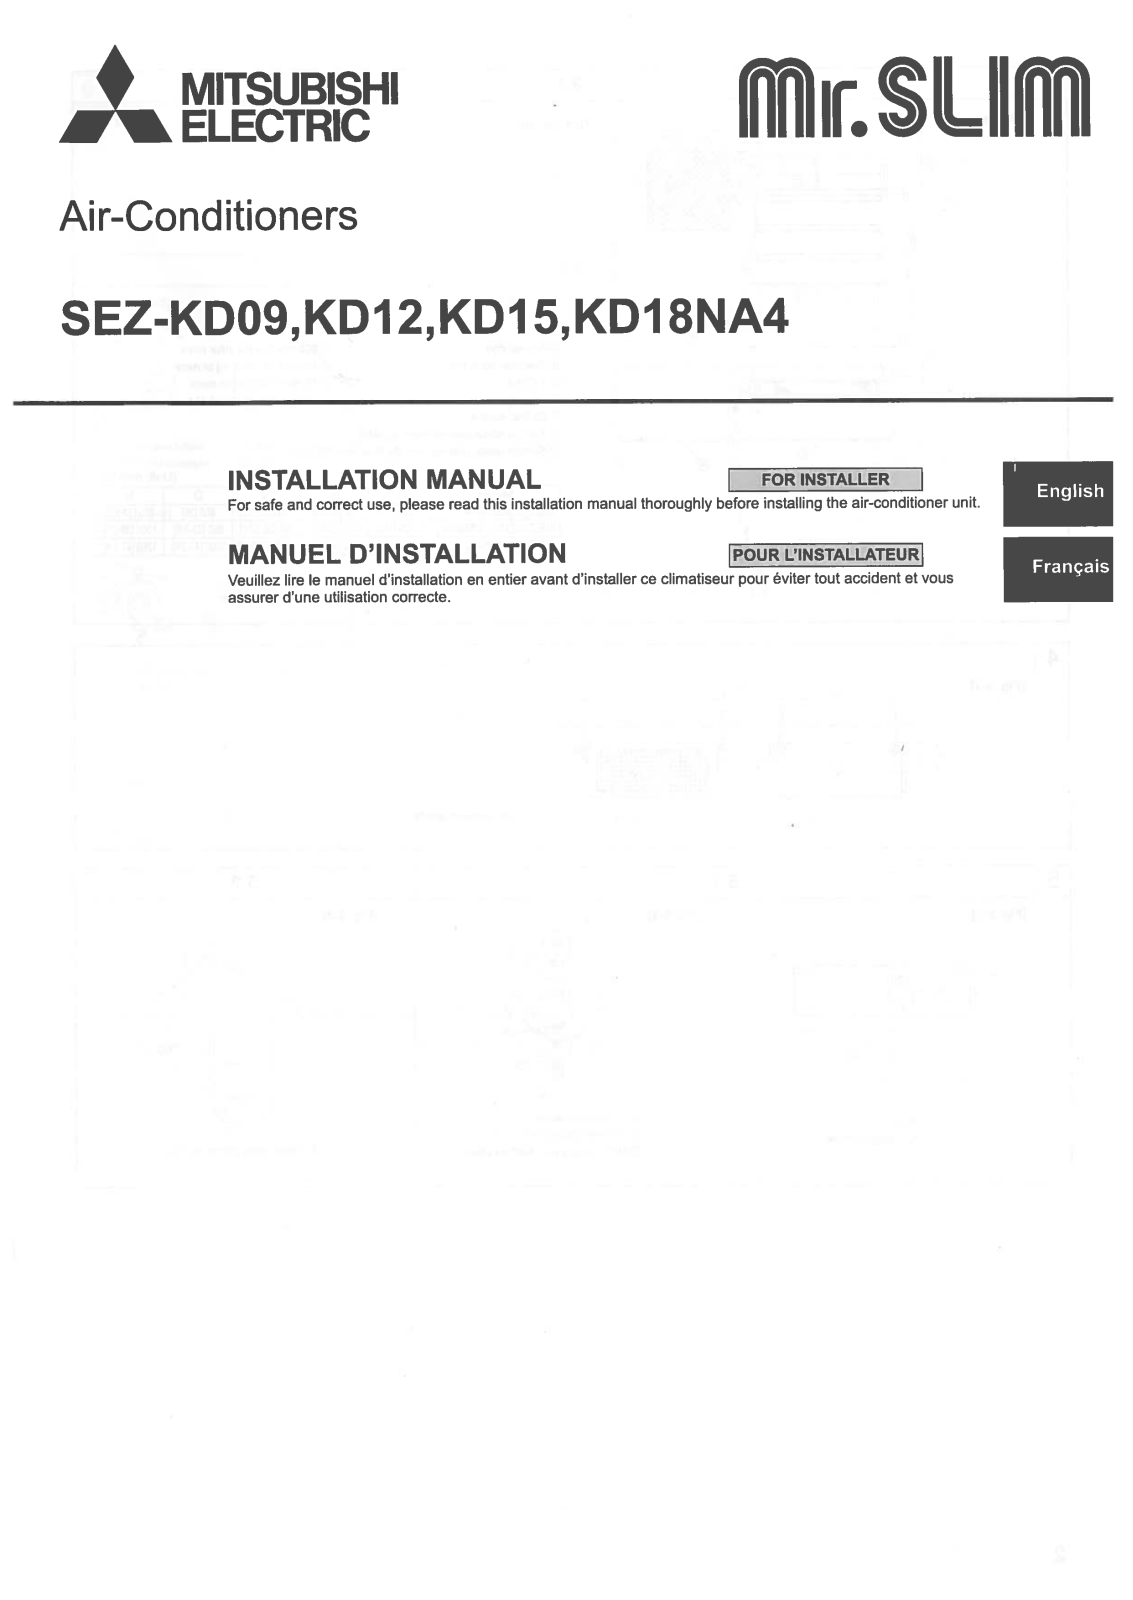 Mitsubishi Electronics SEZ-KD09NA4, SEZ-KD12NA4, SEZ-KD15NA4, SEZ-KD18NA4 Installation Manual